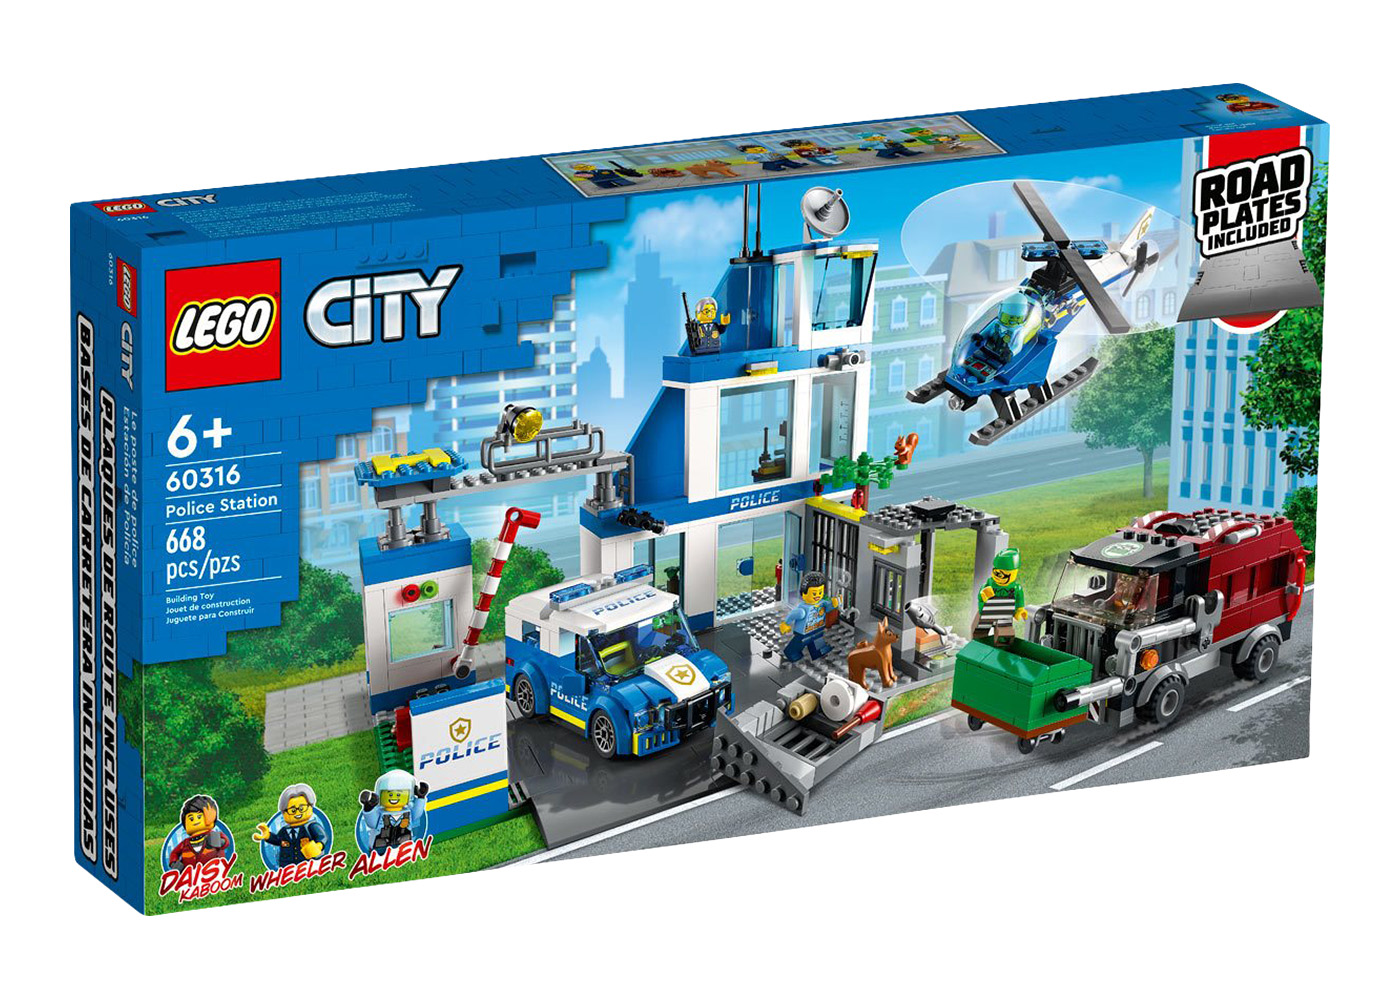 LEGO City Police Station Set 60047 - US